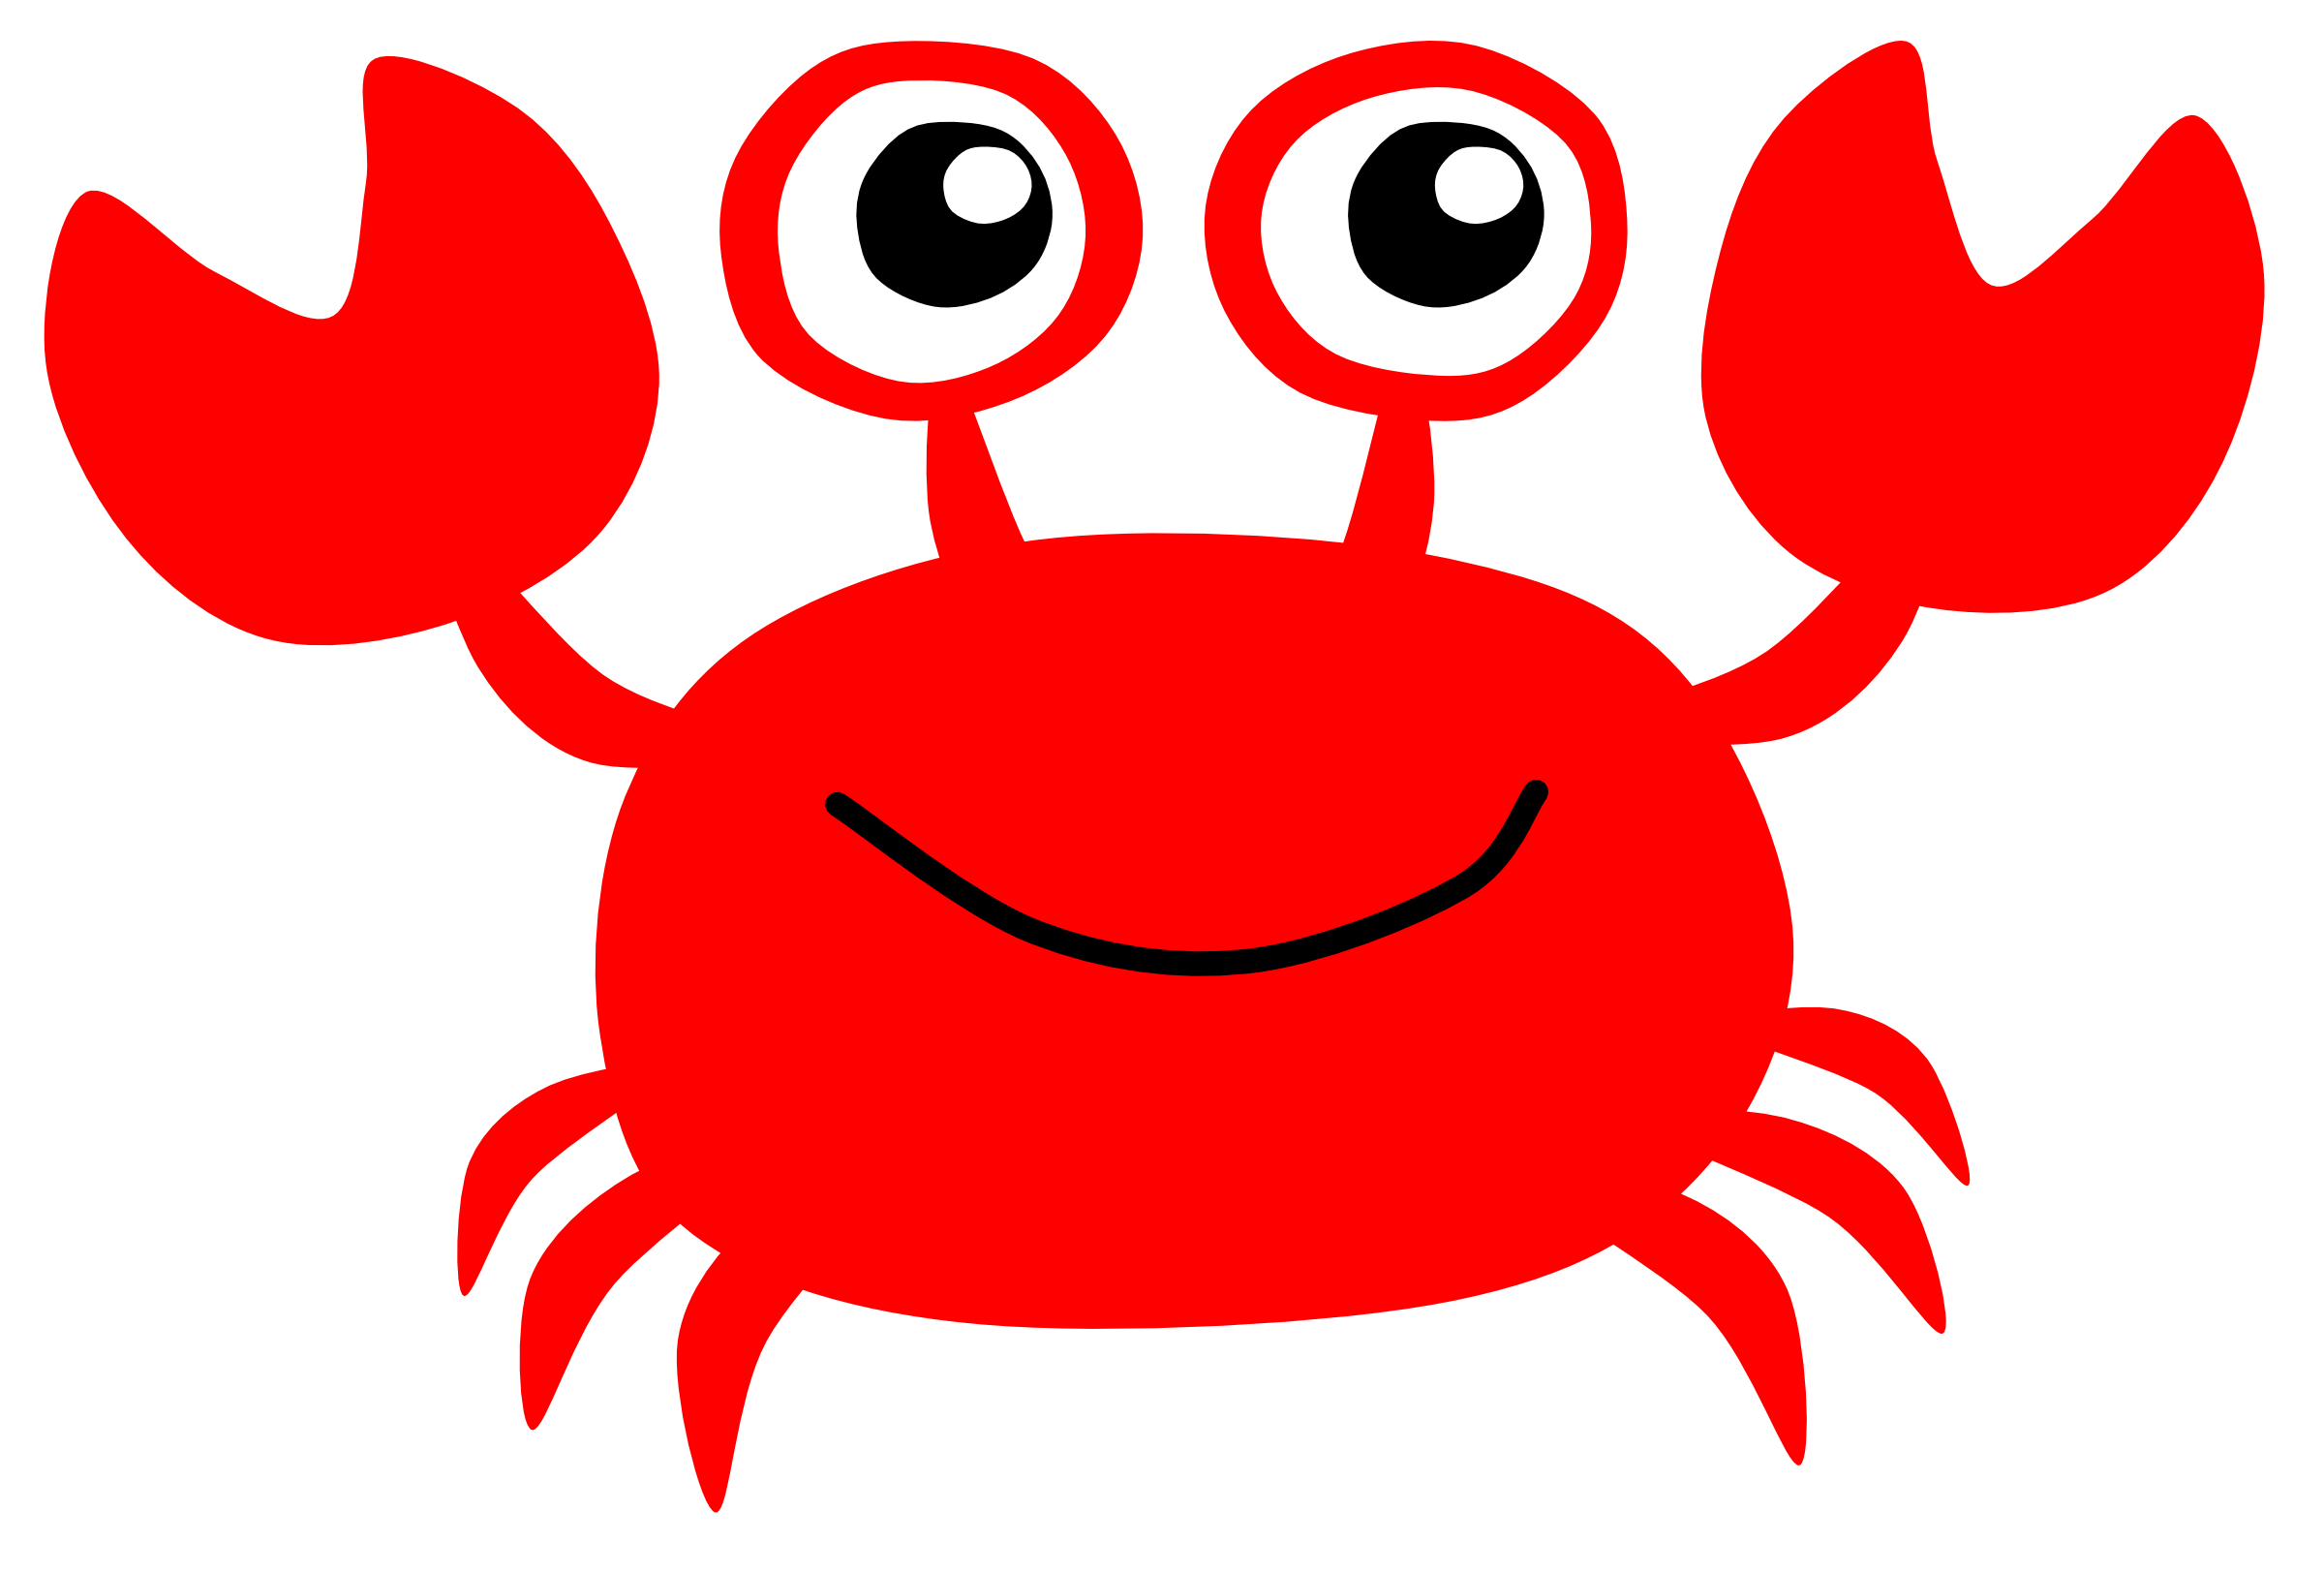 Crab boss seafood signage, Ca